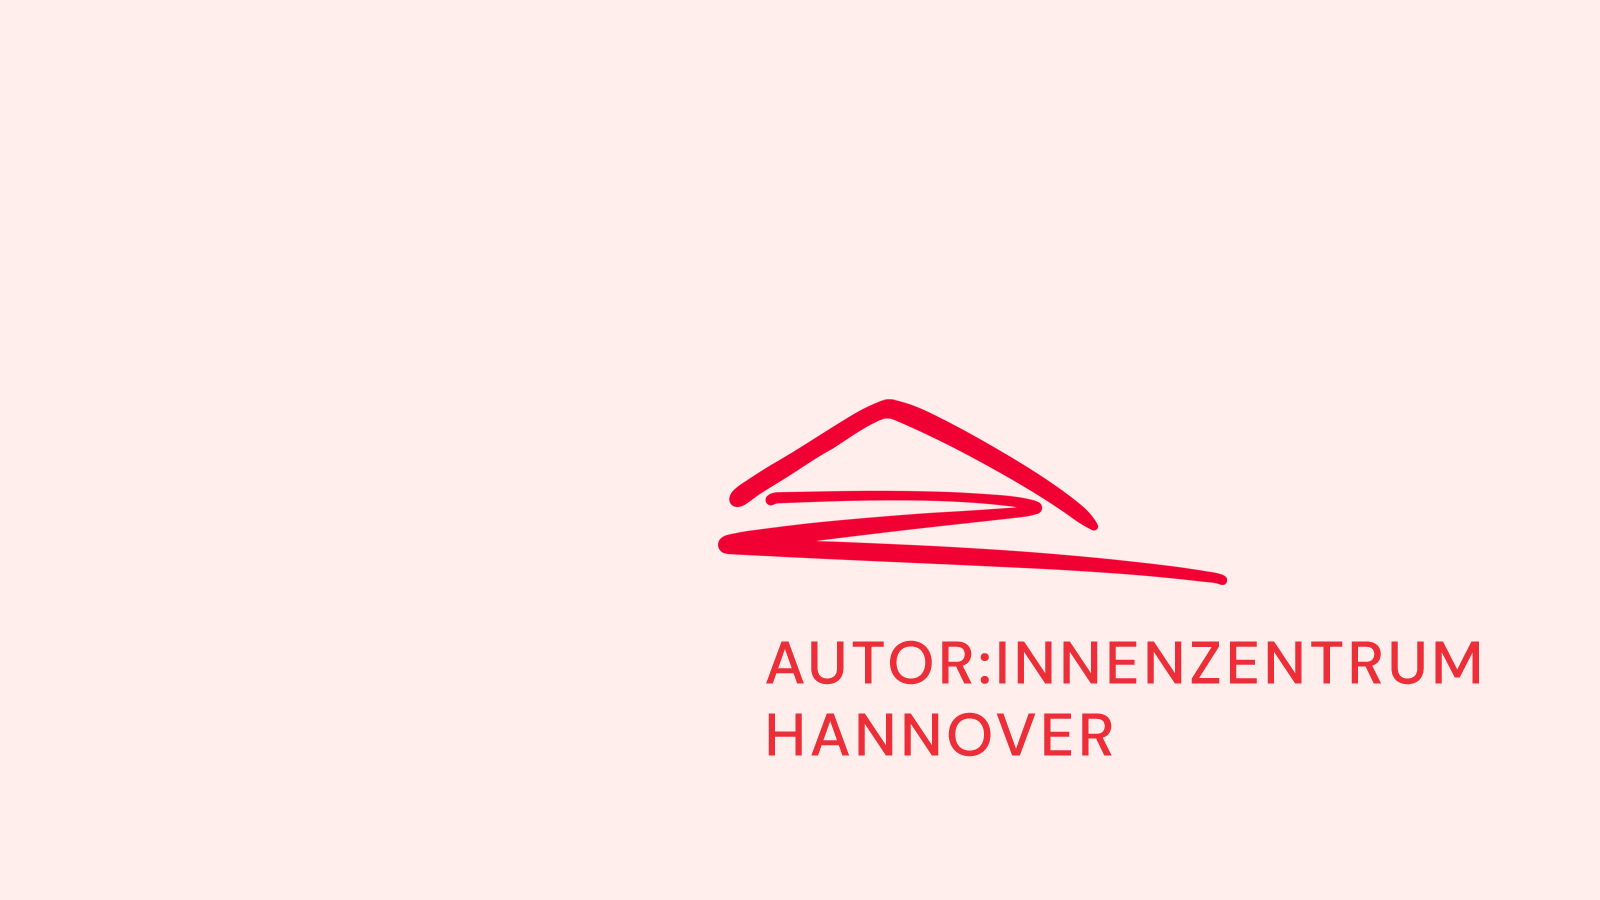 (c) Hannoverschreibt.de